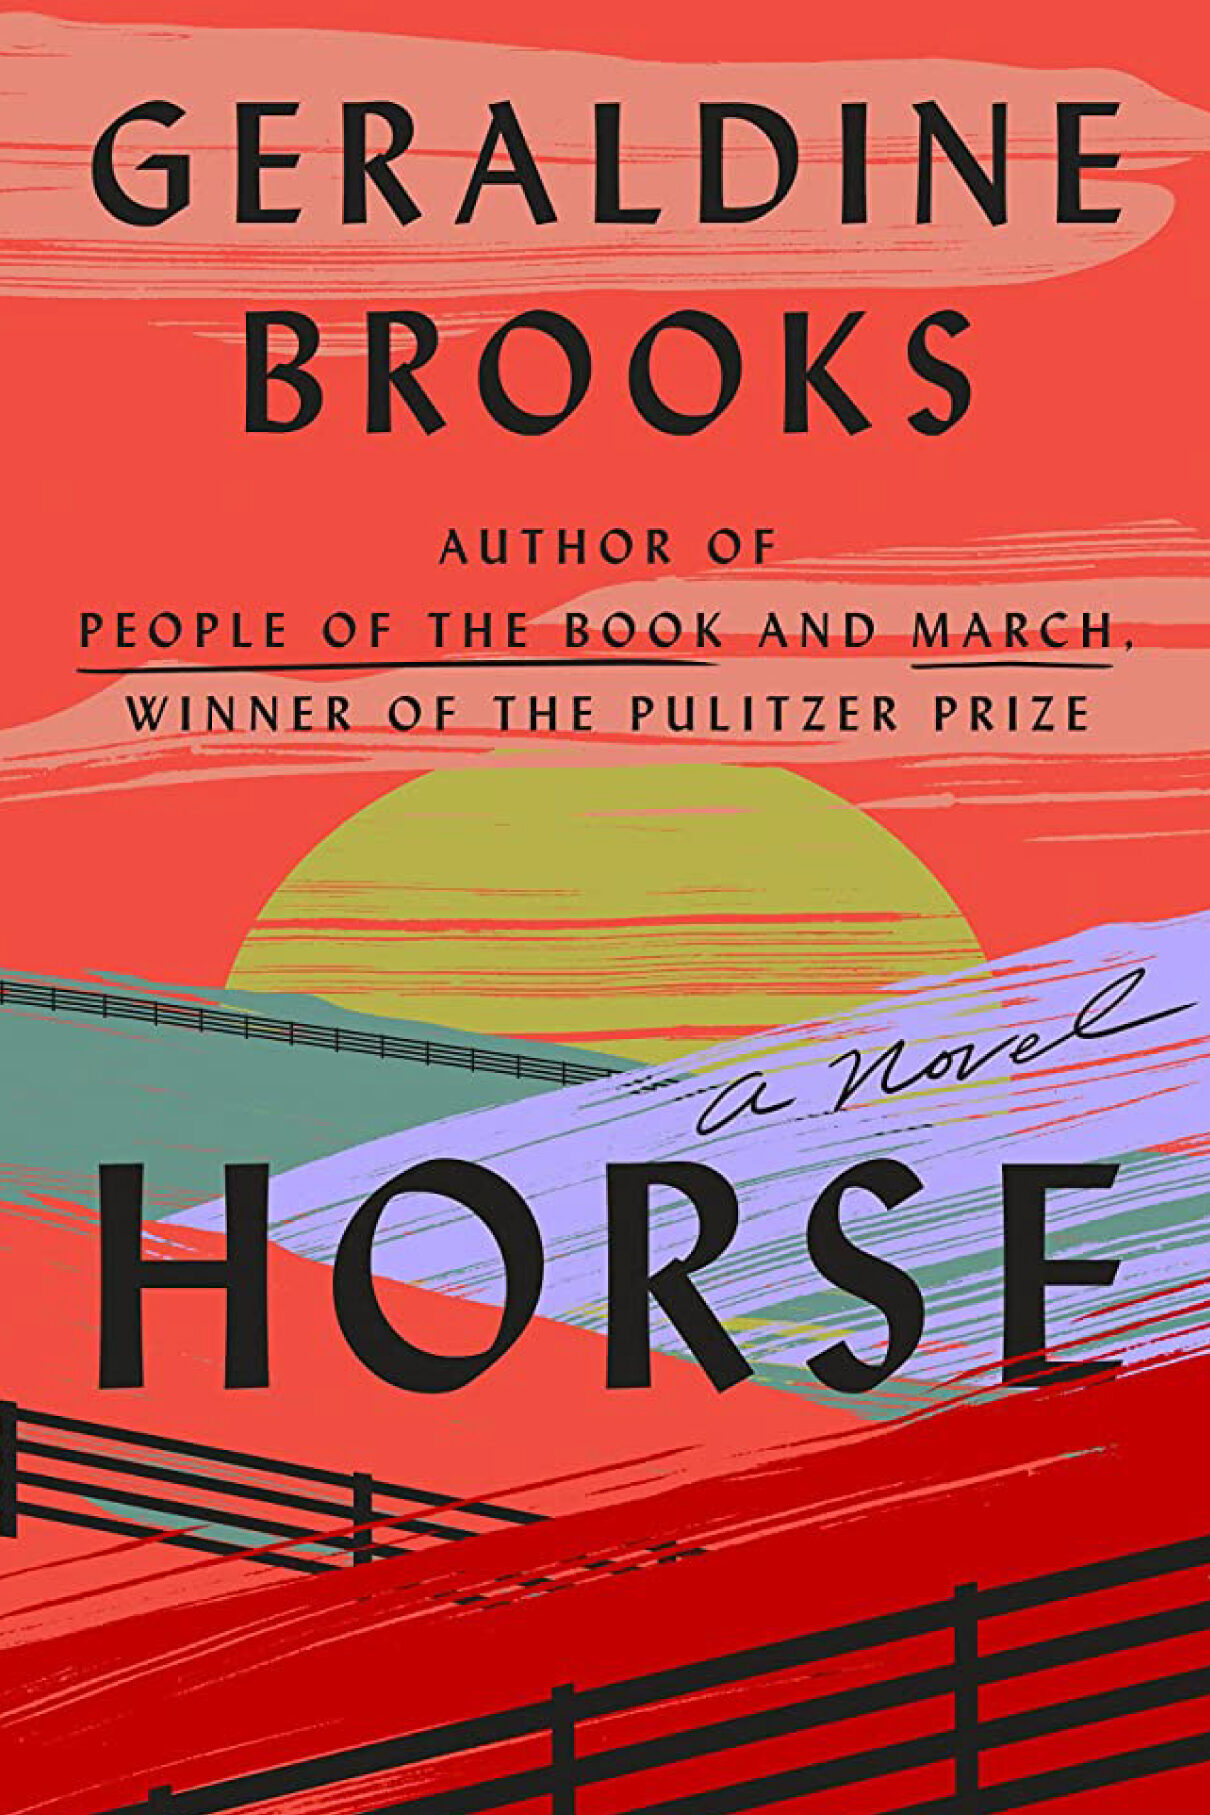 Book cover: "Horse."